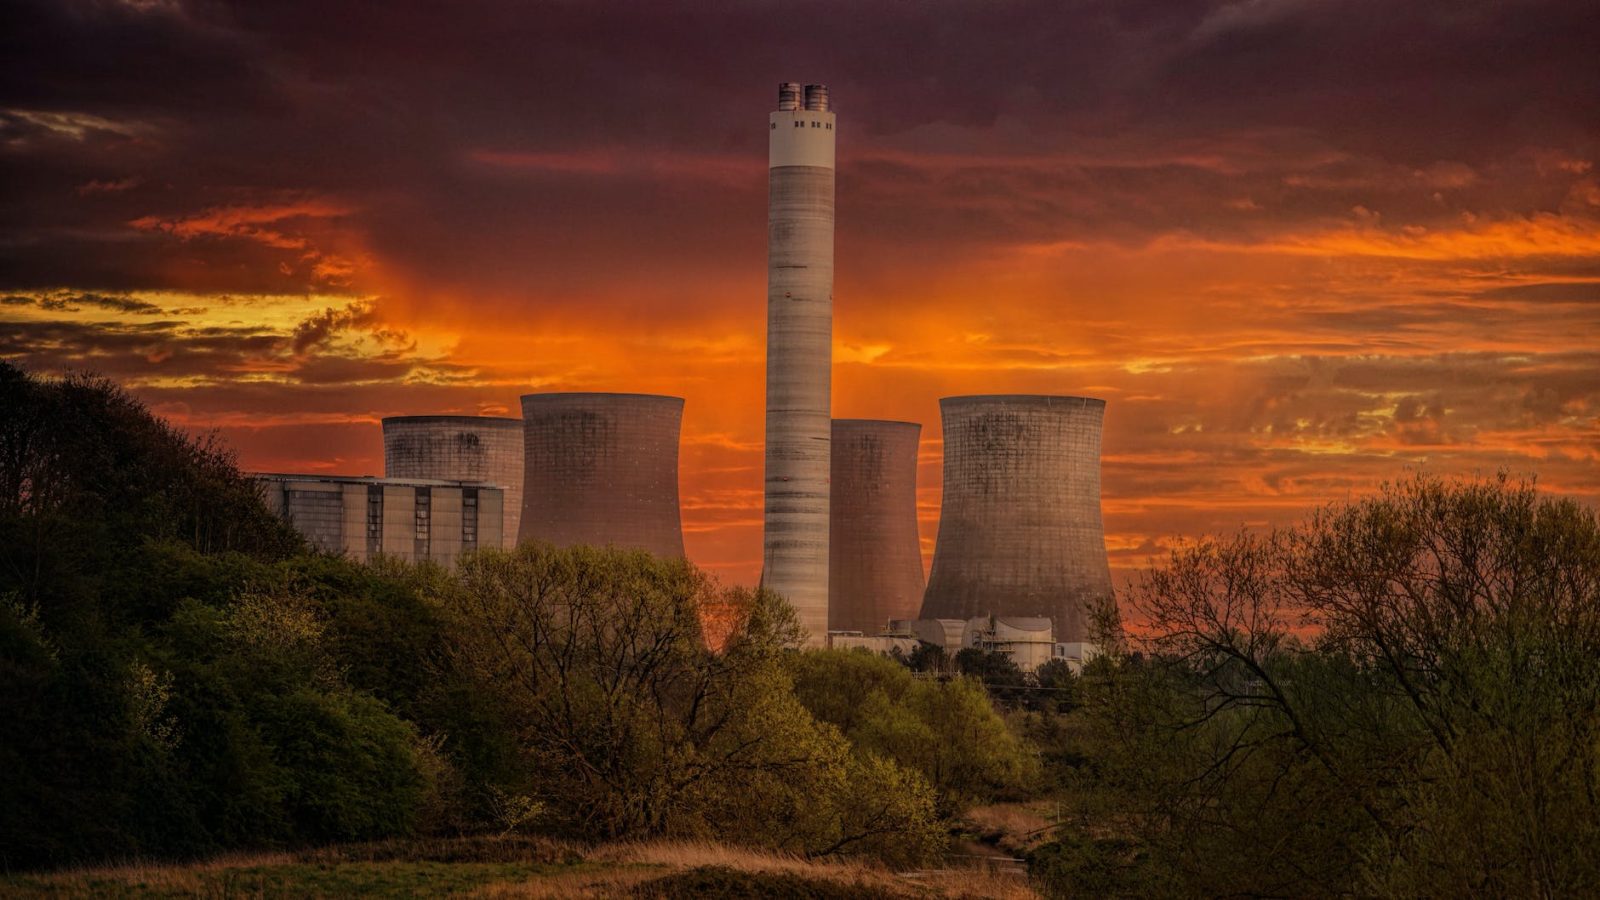 white nuclear plant silo under orange sky at sunset